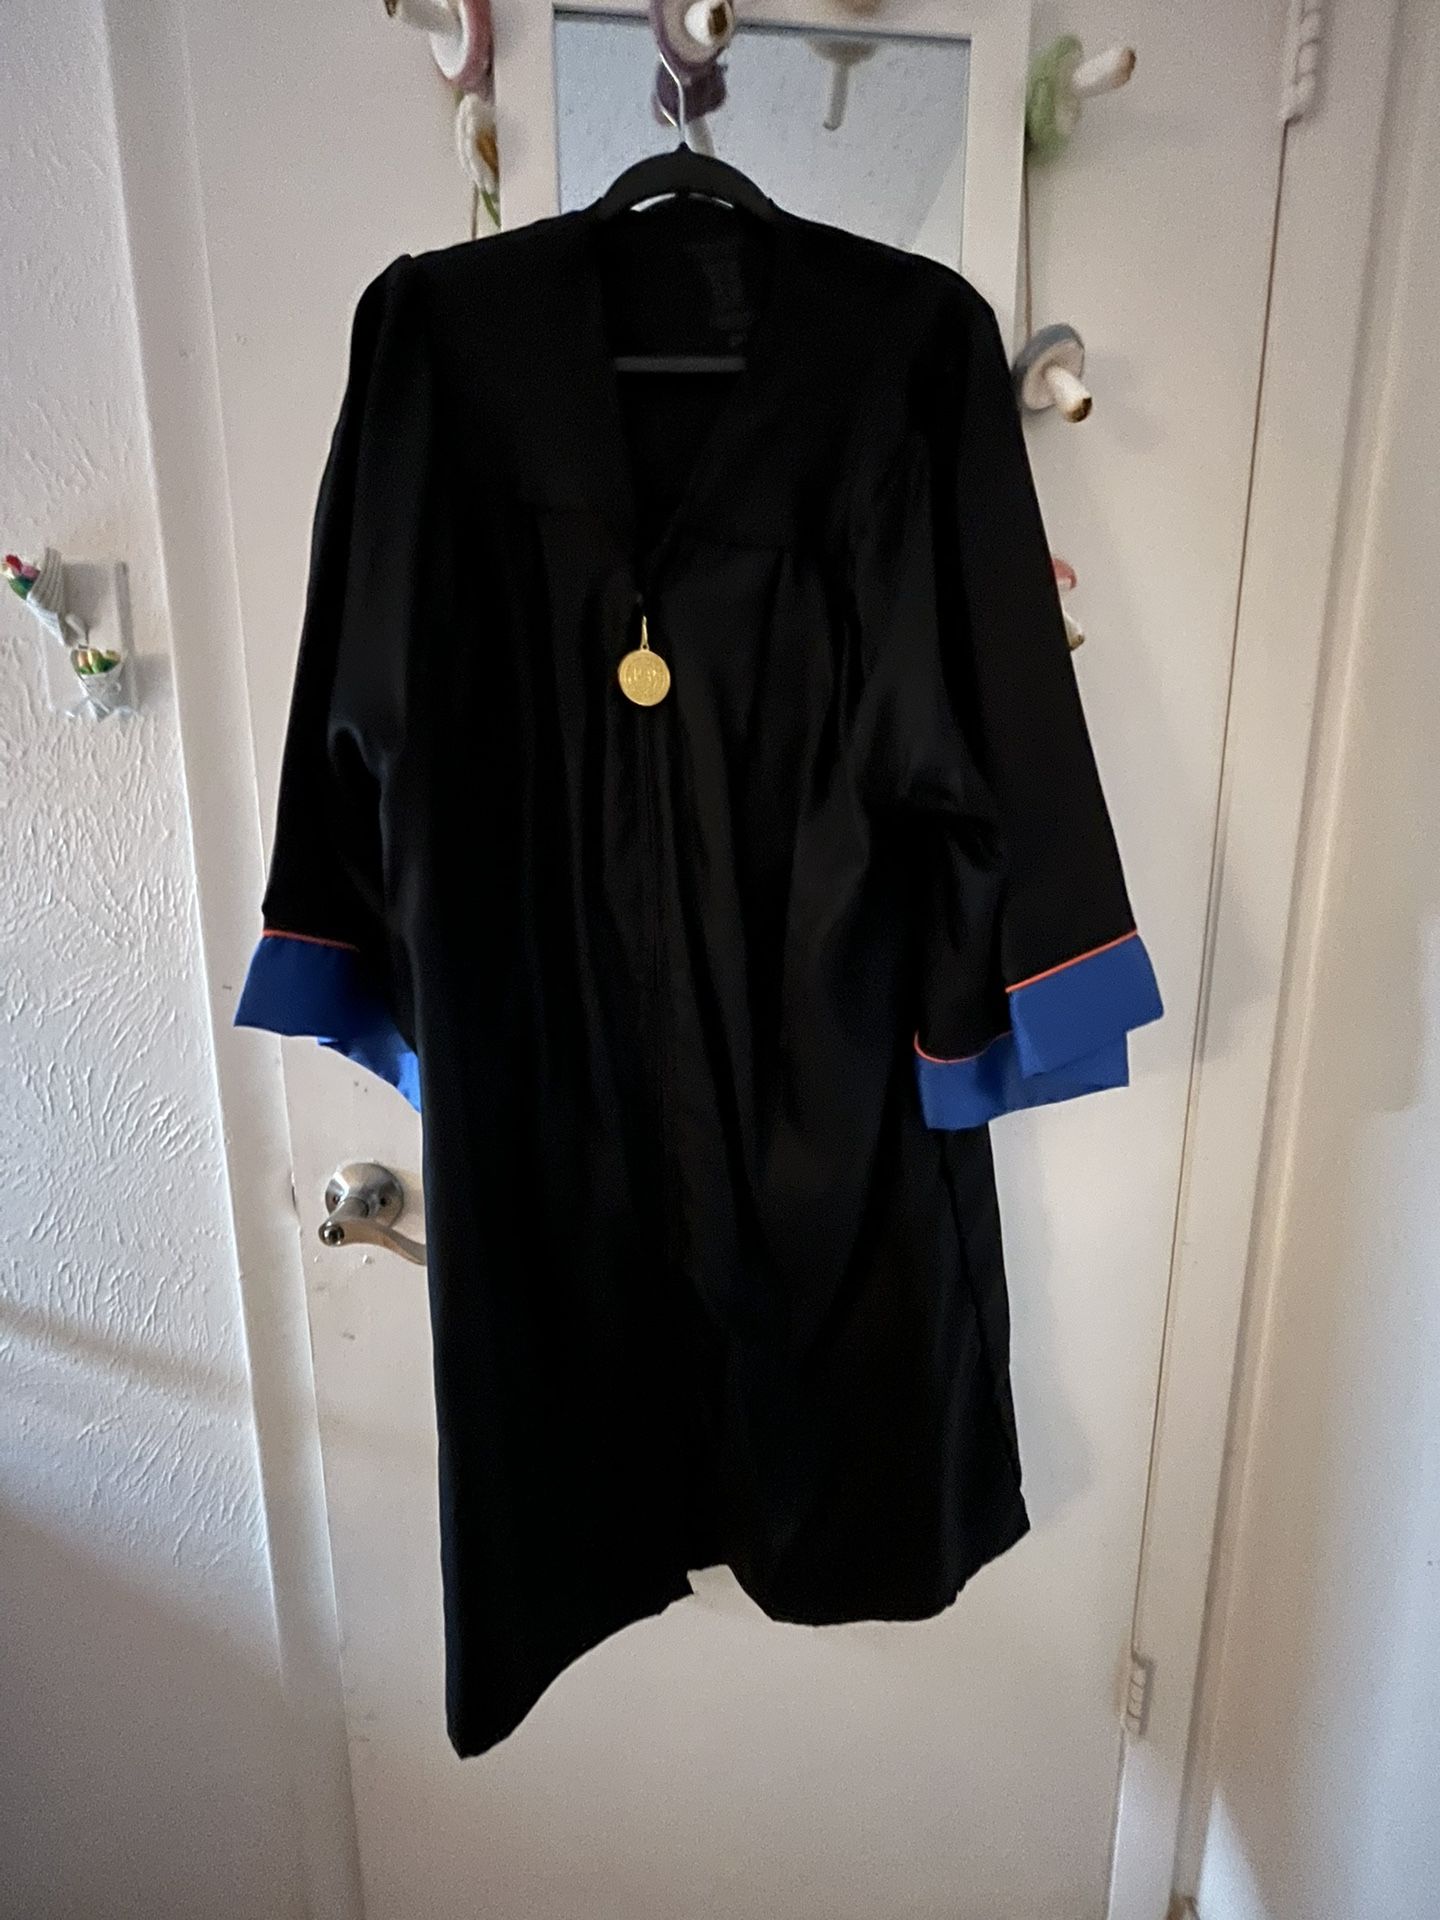 Ut Arlington Graduation Gown 5’1